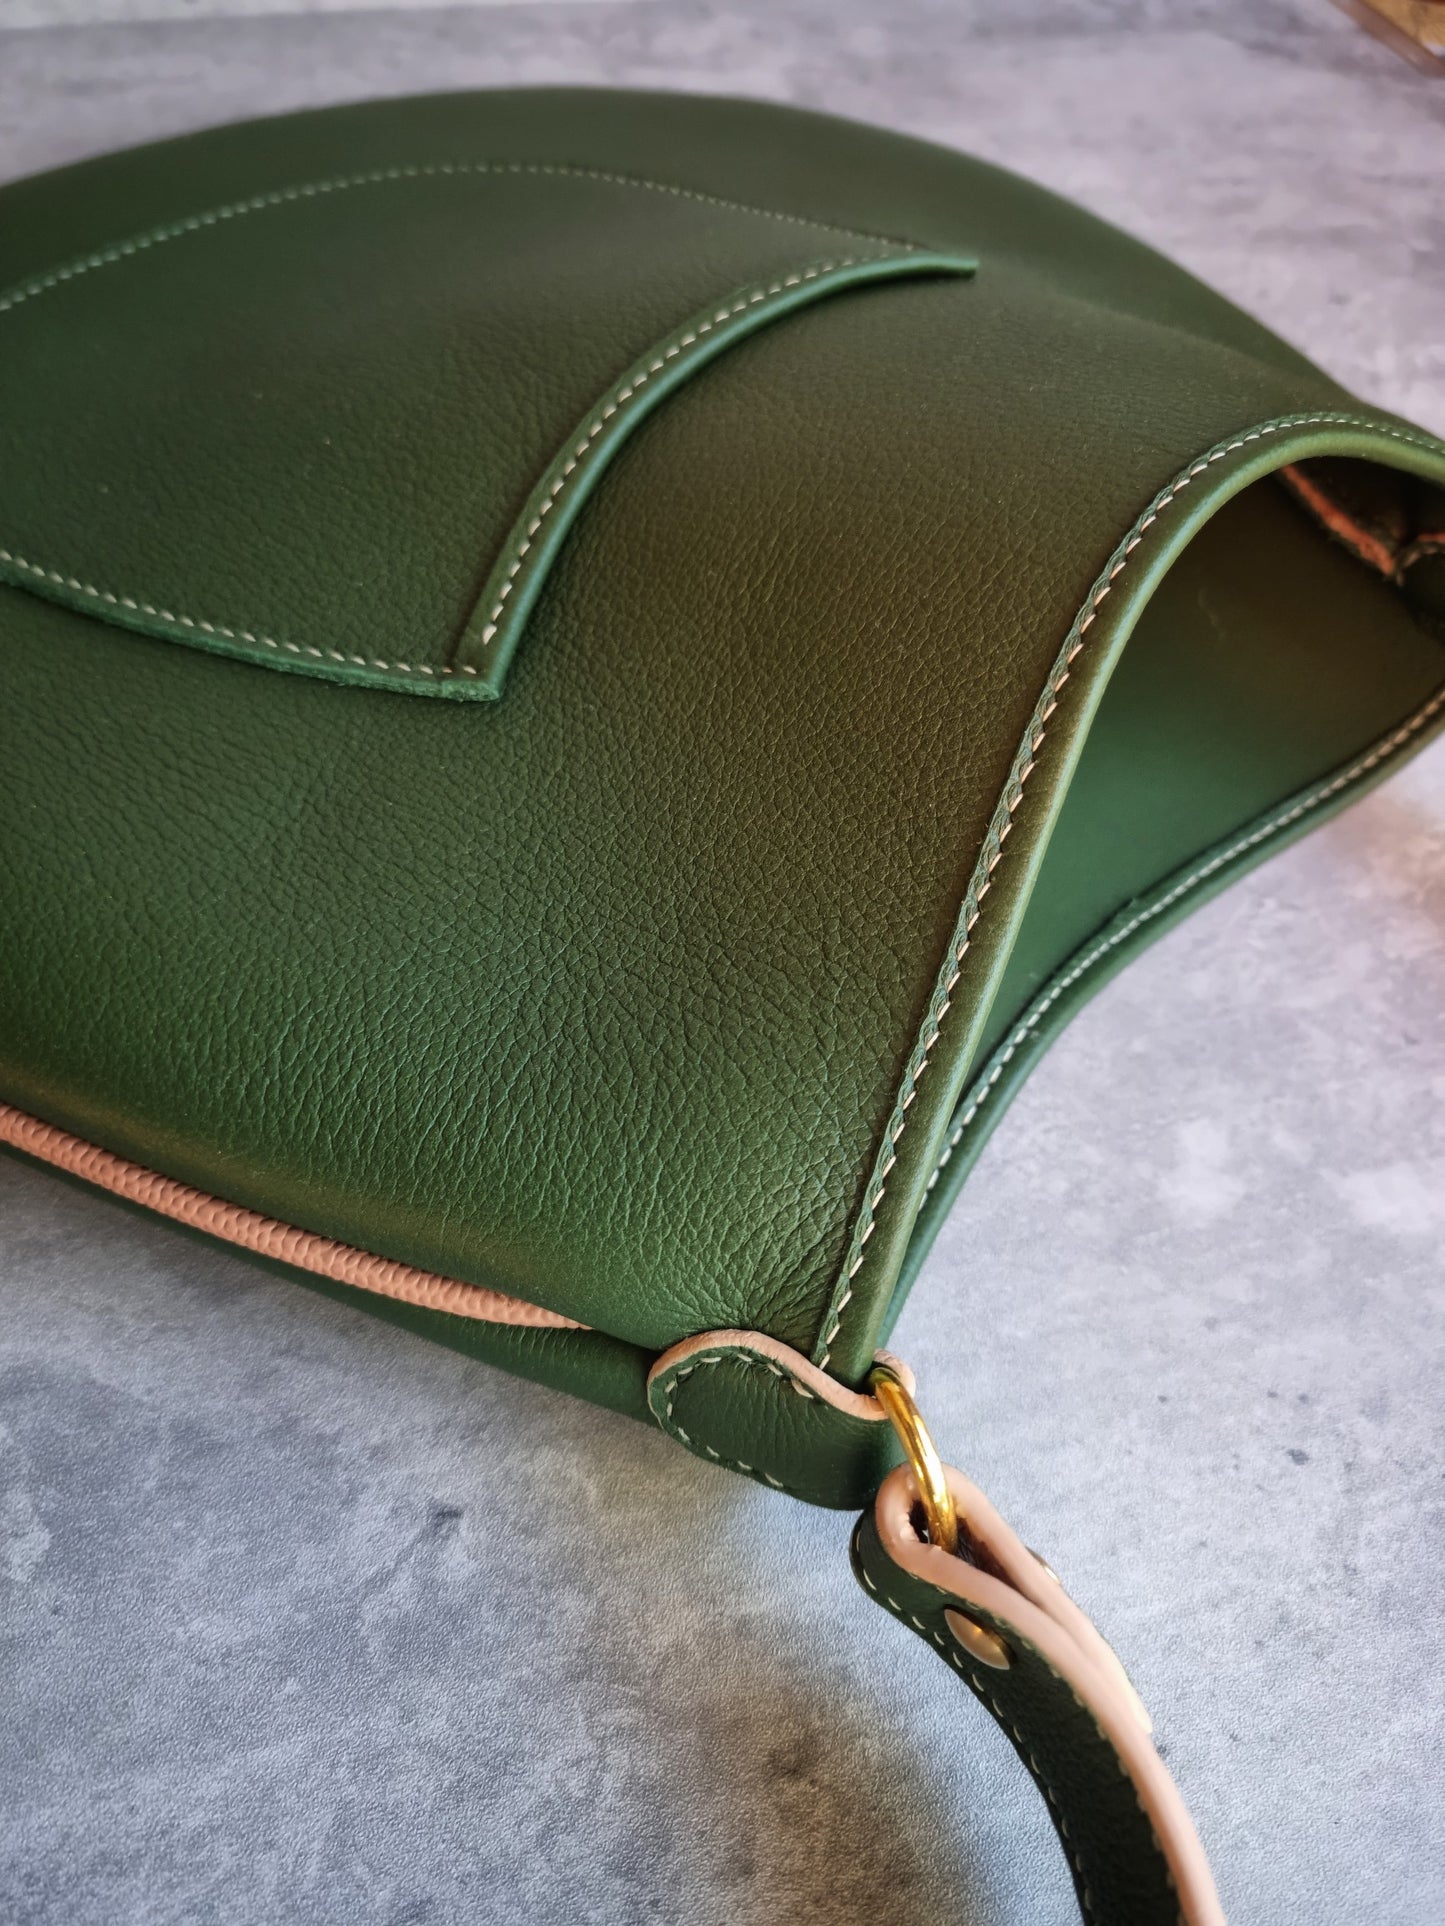 The Hobo handbag | DIY | Pattern Pdf | Leather craft template